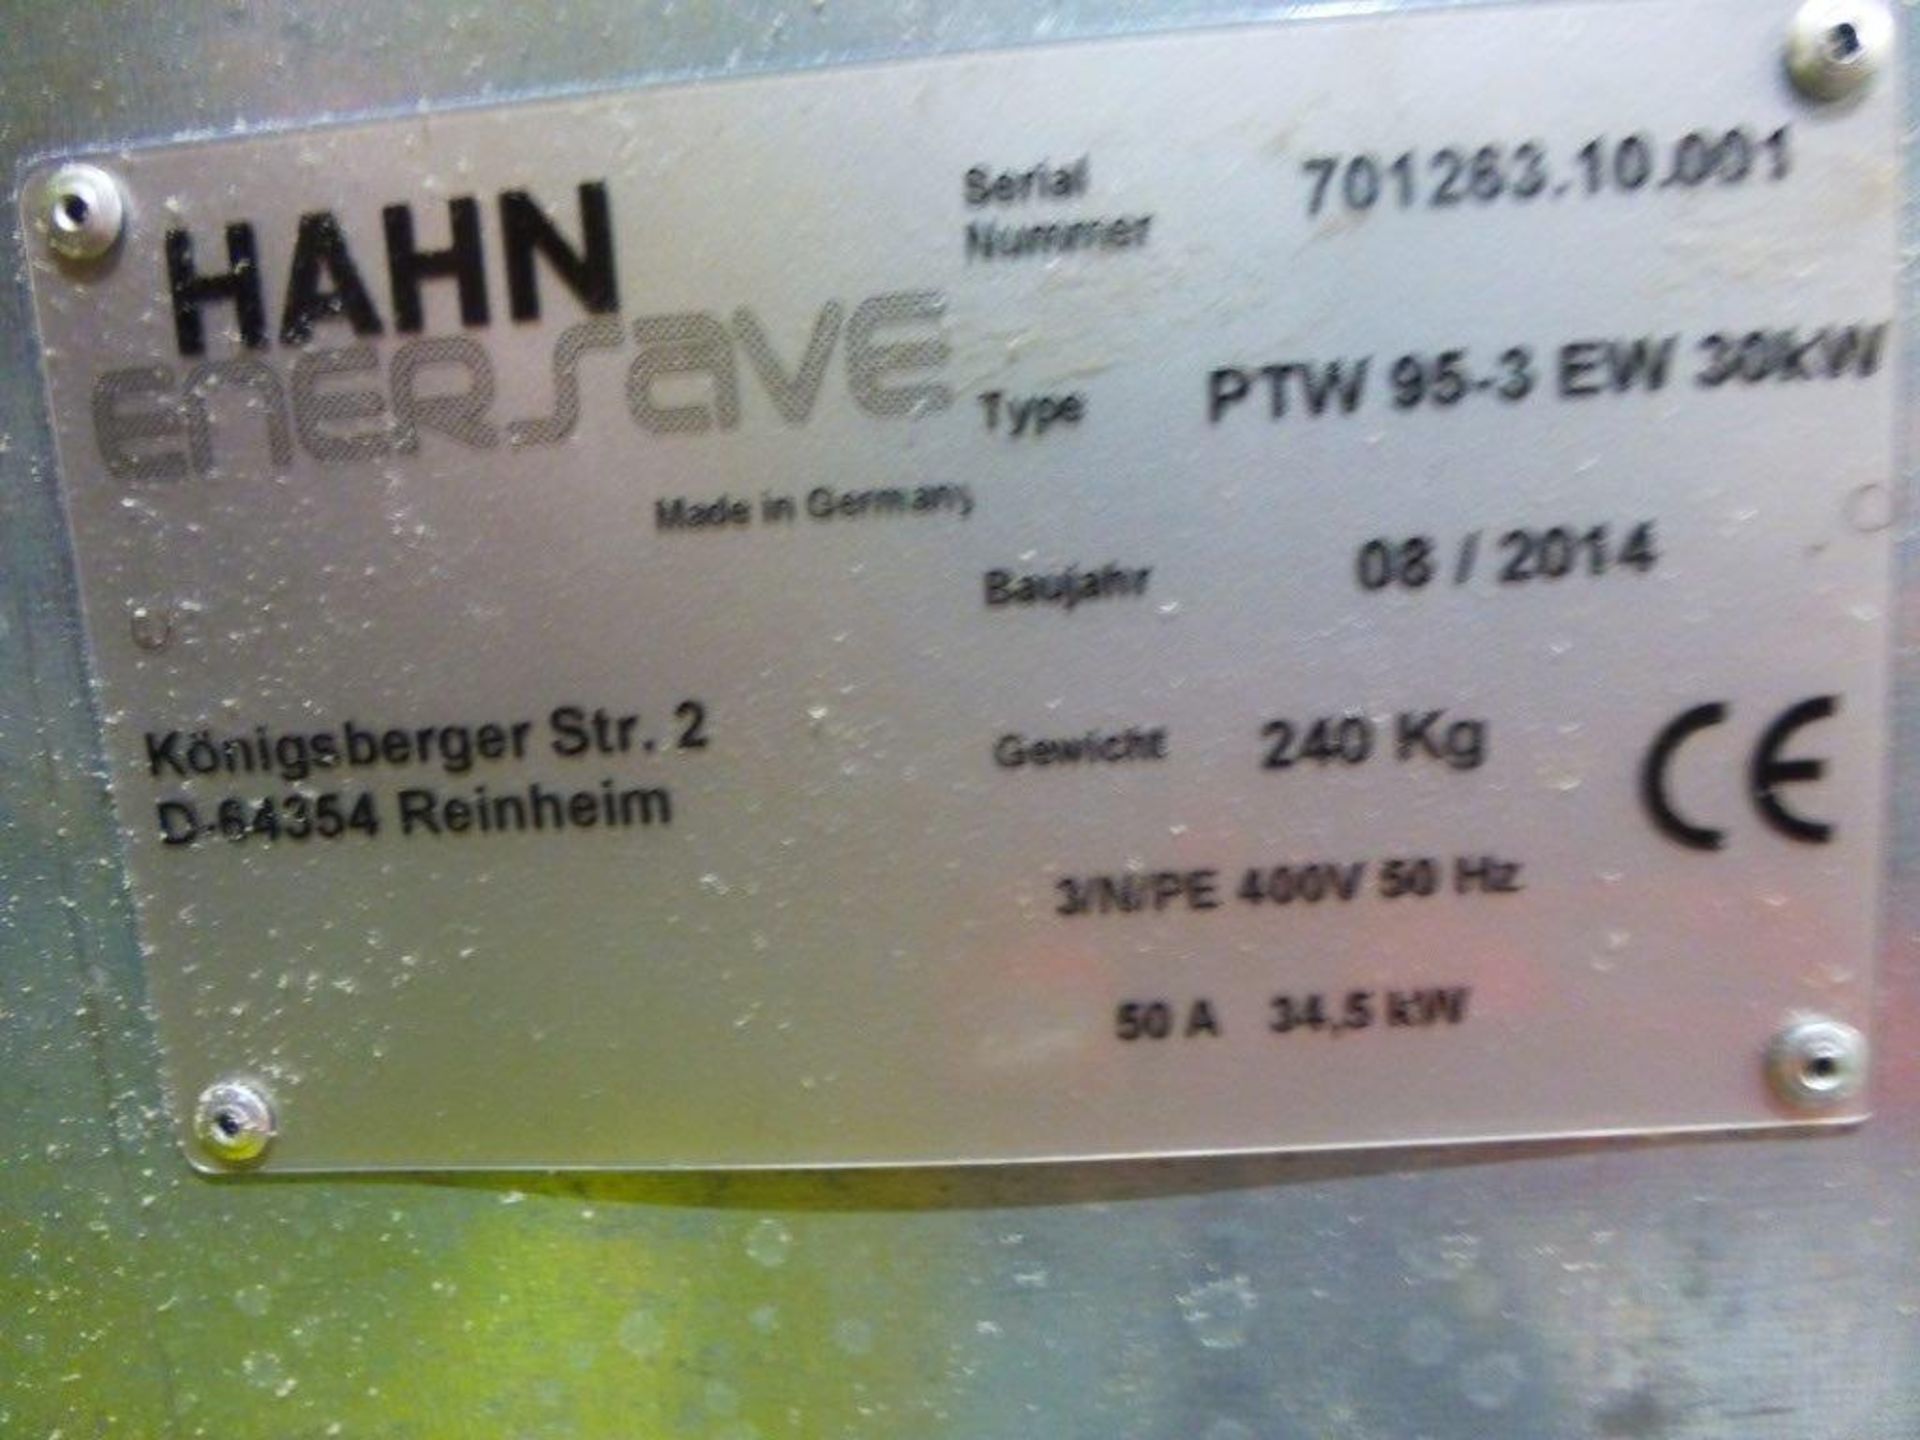 Hahn Enersave PTW-95-3EW 30kW, temperature control unit, serial no 701263.10.001 (2014) (A Risk - Bild 2 aus 2